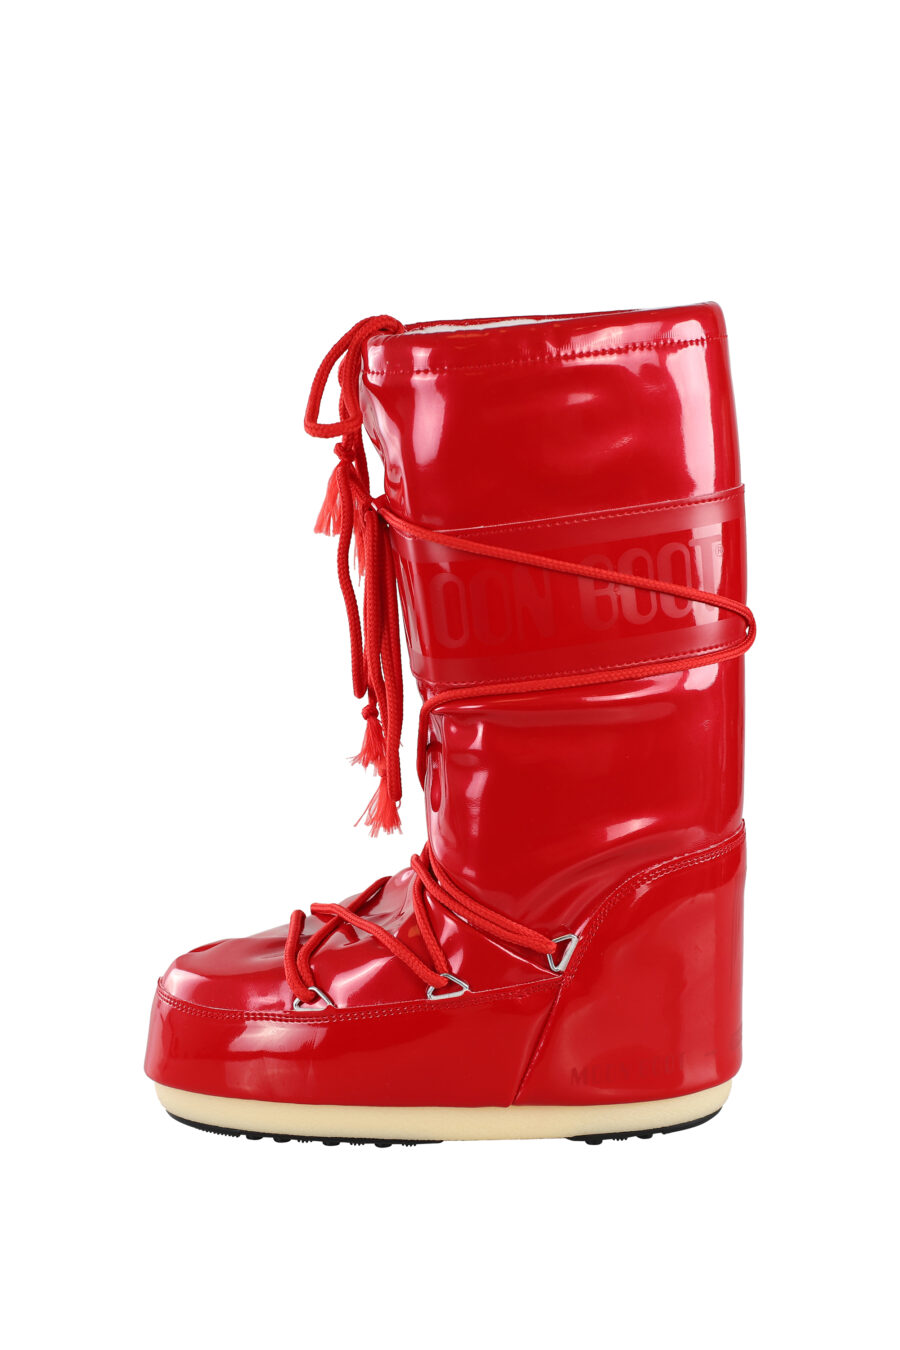 Botas de nieve rojas con logo monocromático - IMG 6751